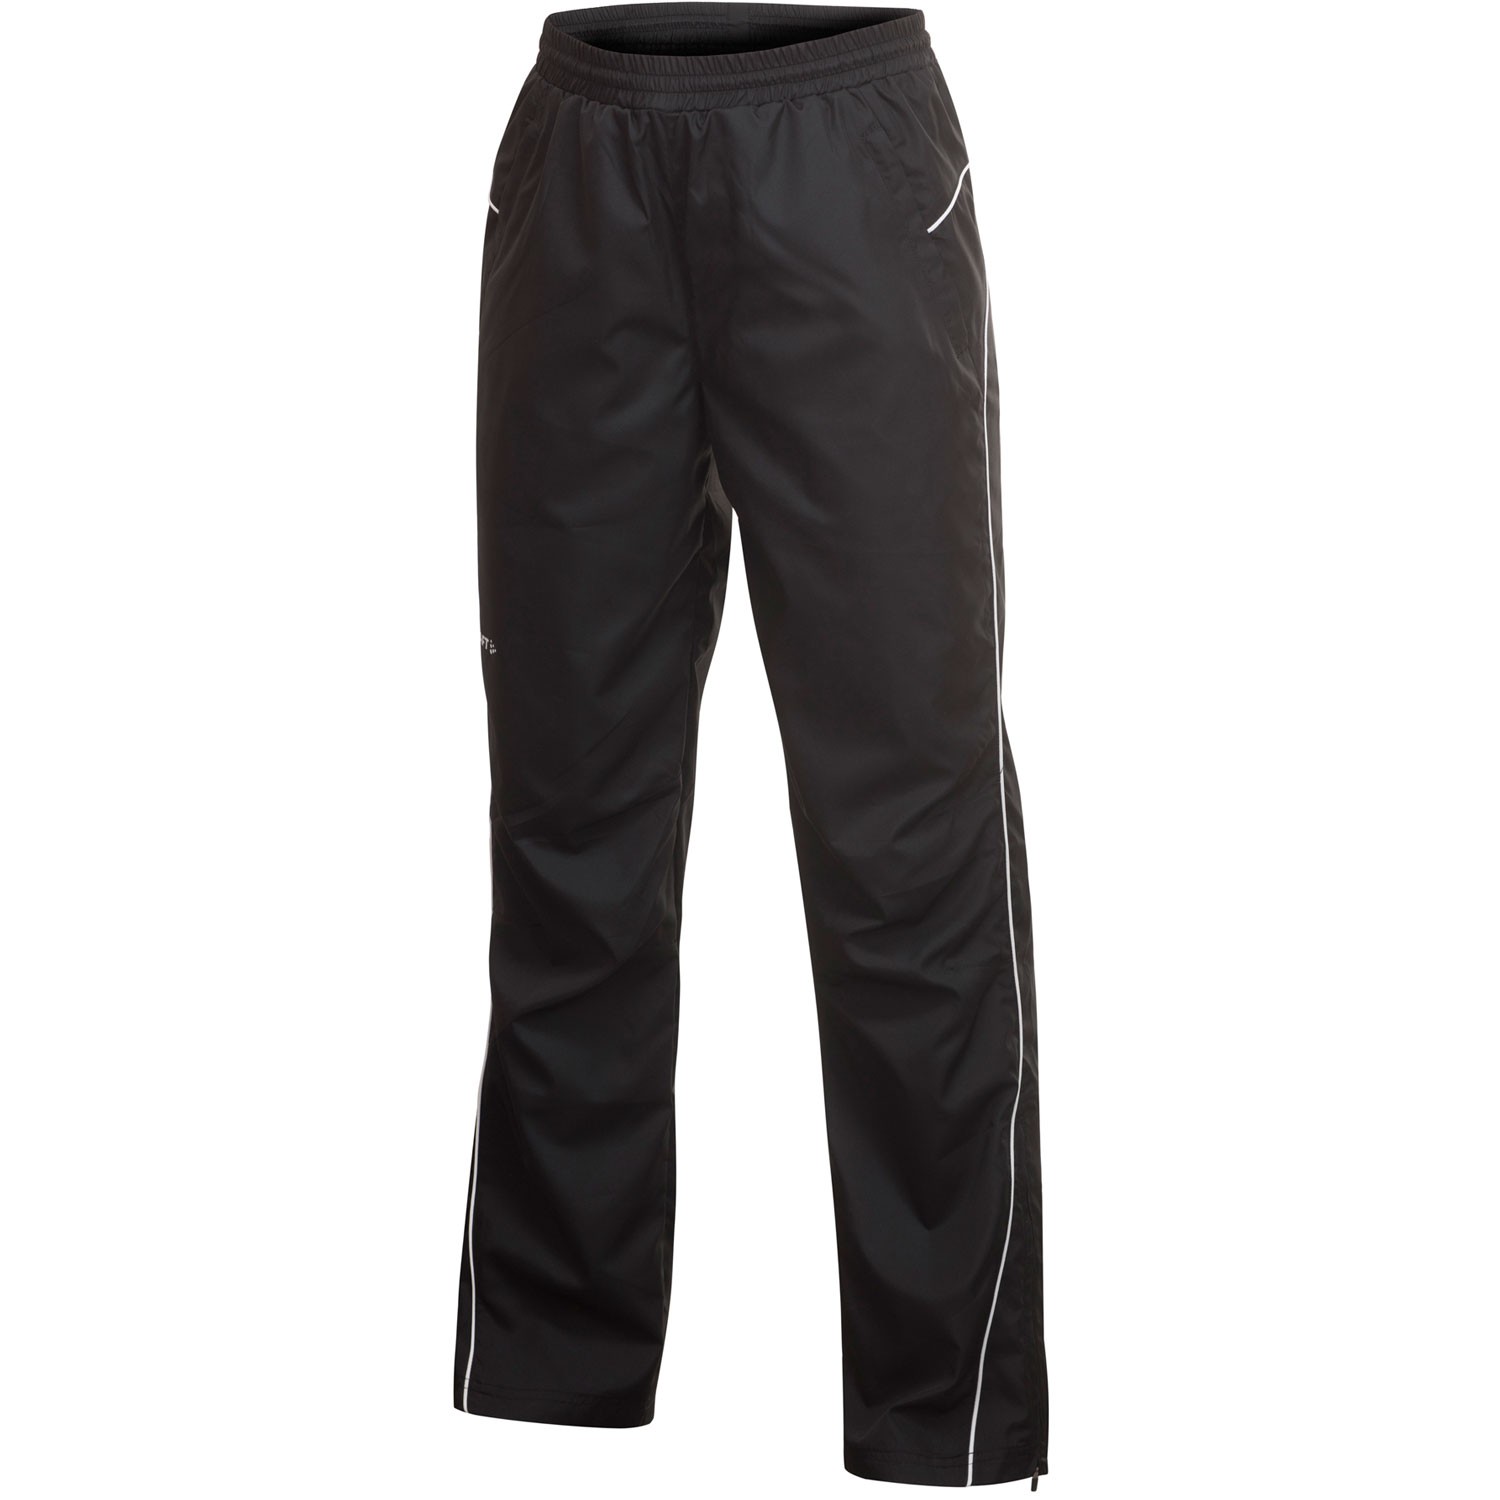 Craft Running Wind Pants Women - Pants - Athletic apparel - Sport ...